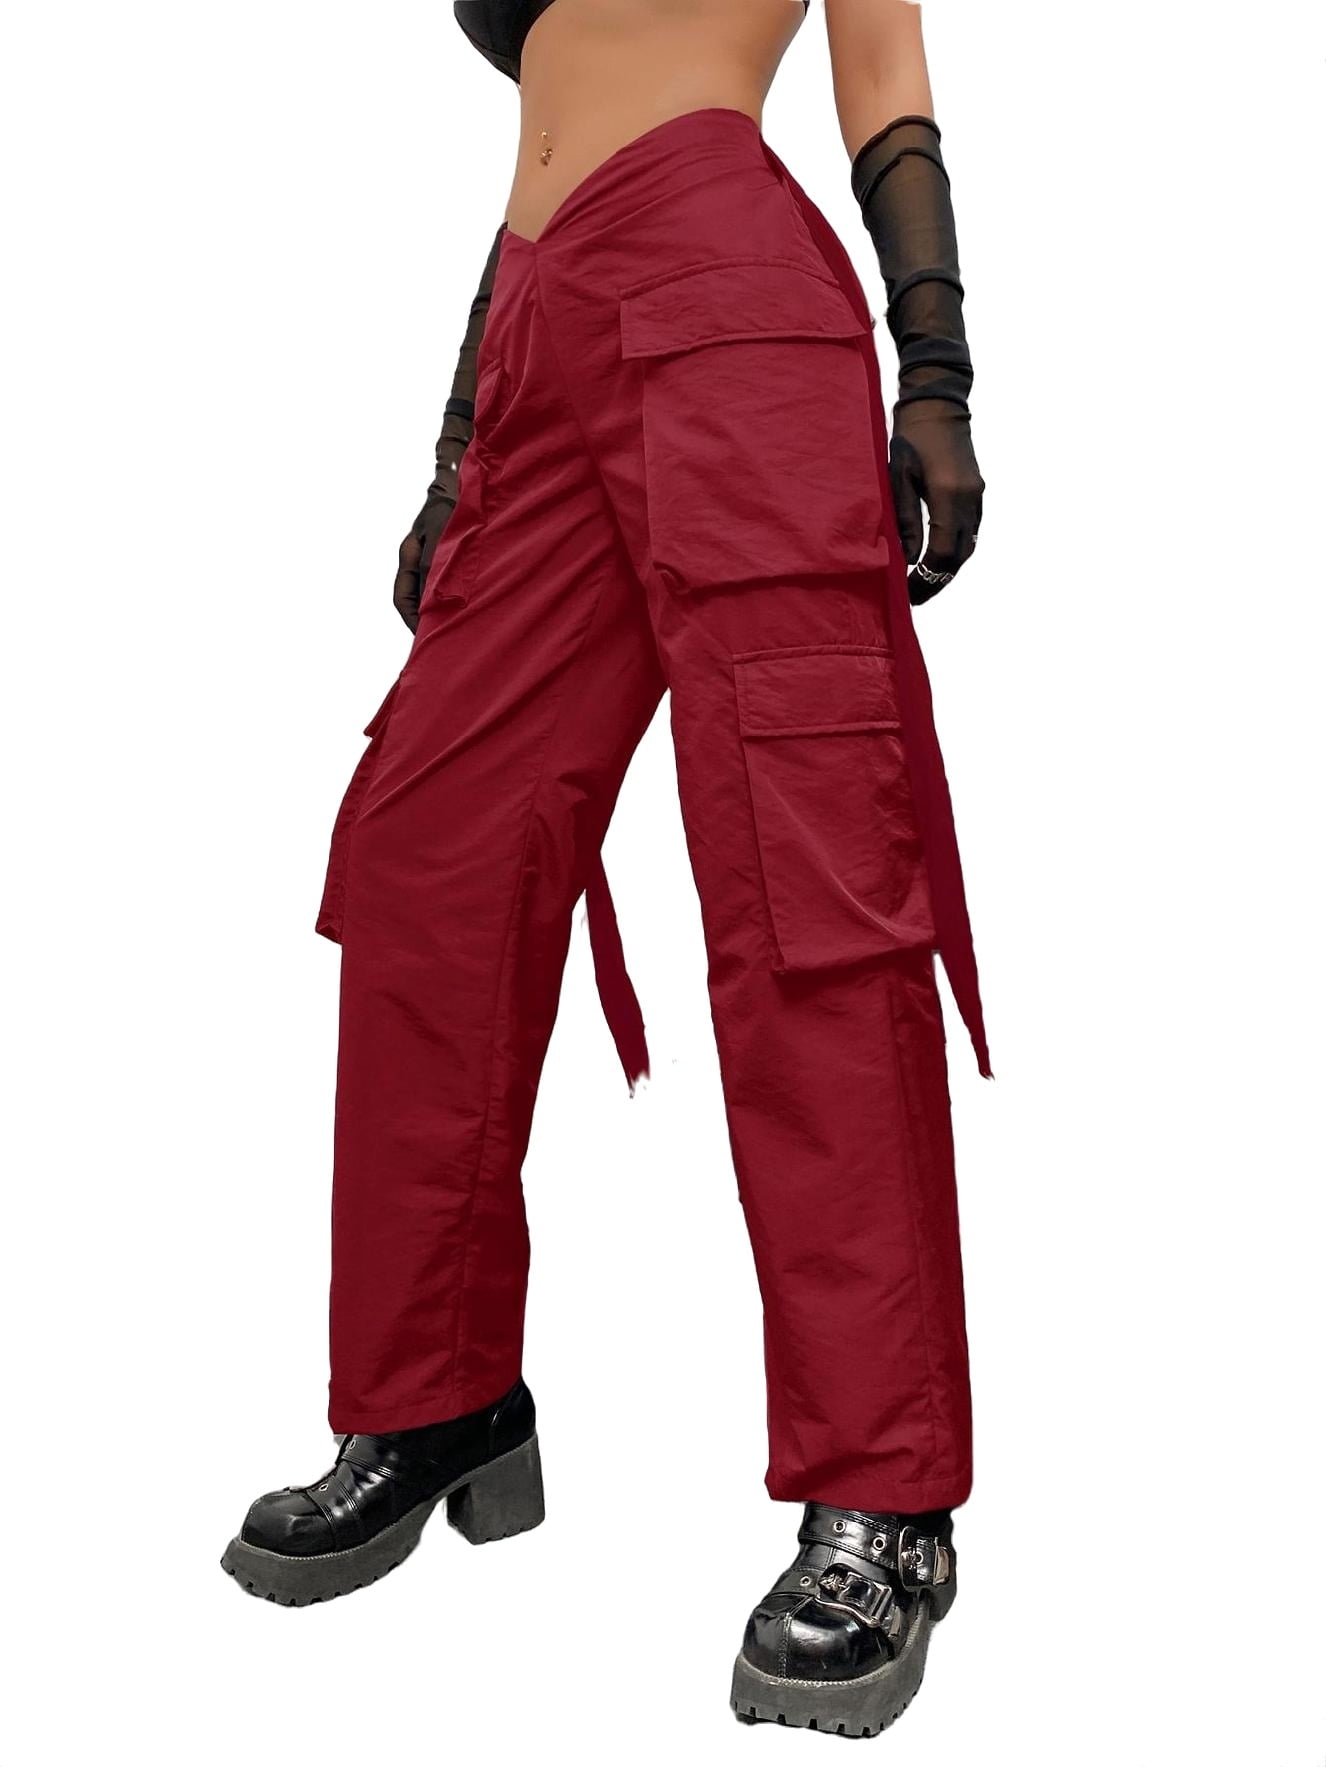 Casual Plain Cargo Pants Red Women's Pants (Women's)